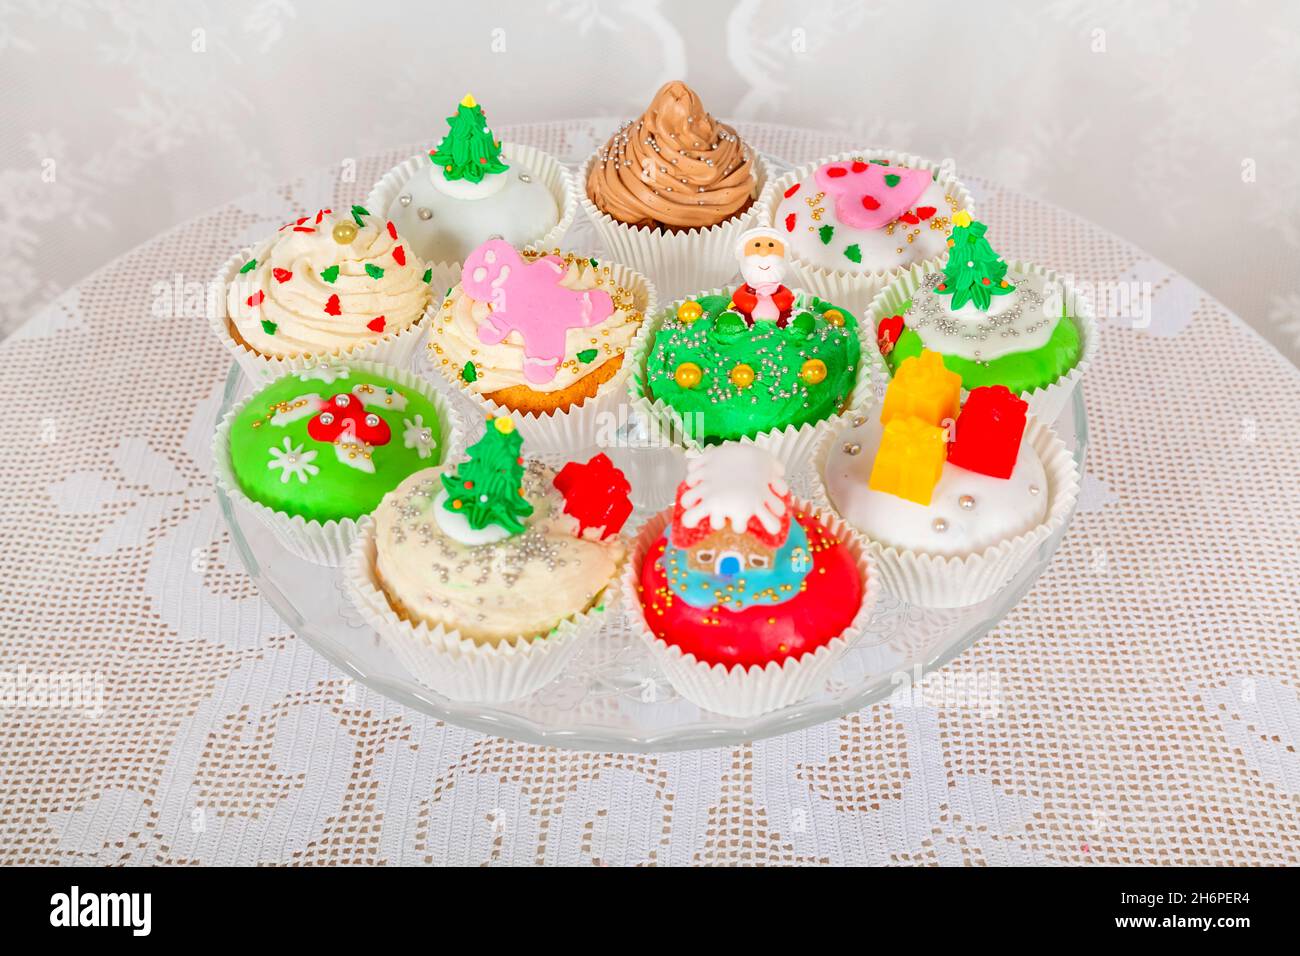 Un soporte de cristal con pasteles caseros, pastelitos, magdalenas decoradas en un estilo navideño. Mini pastelitos de postre navideños festivos de temporada en d tradicional Foto de stock